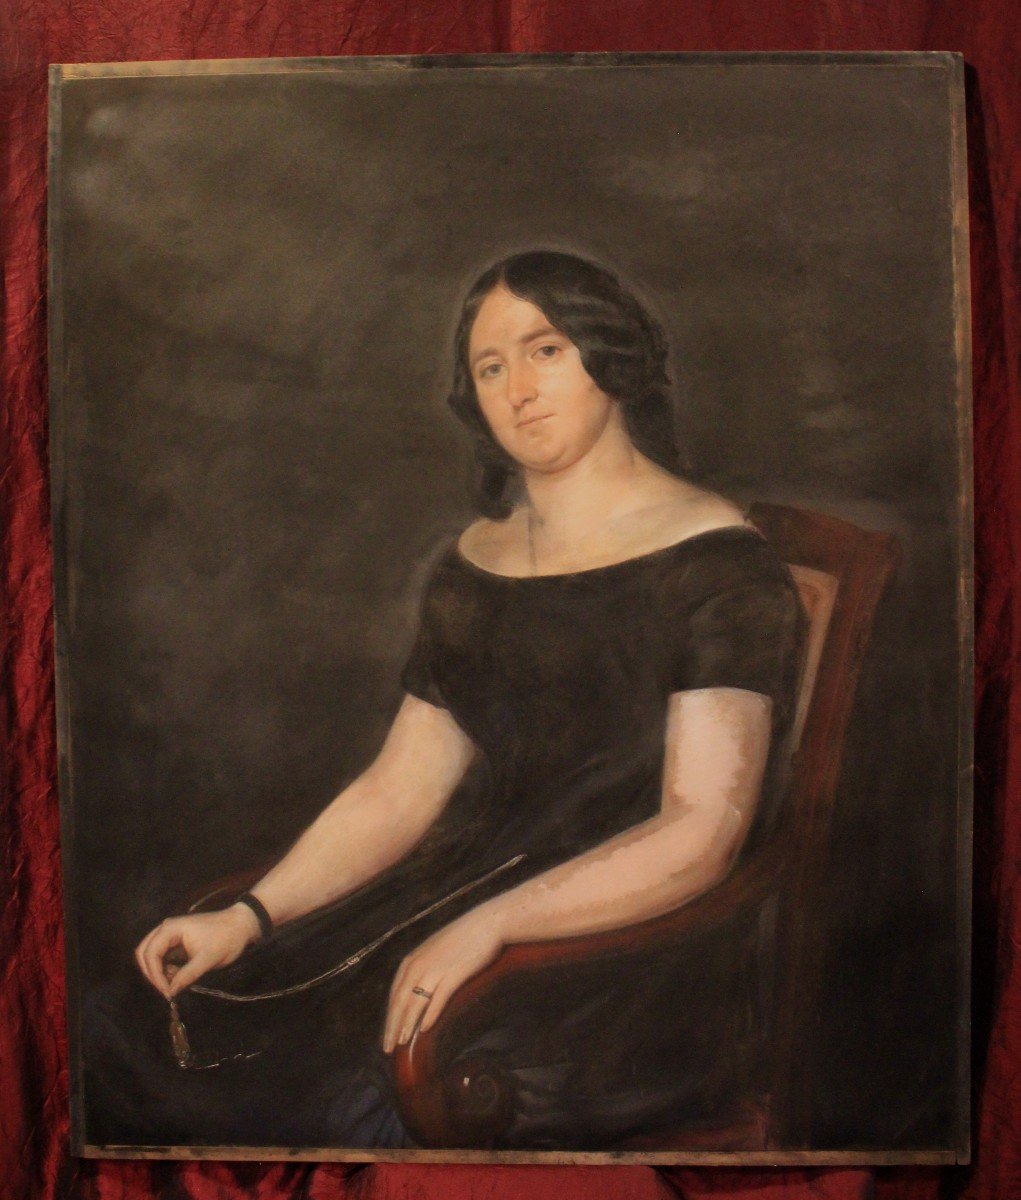 Large Charcoal And Pastel Portrait 19th Century 87 X 106 Cm